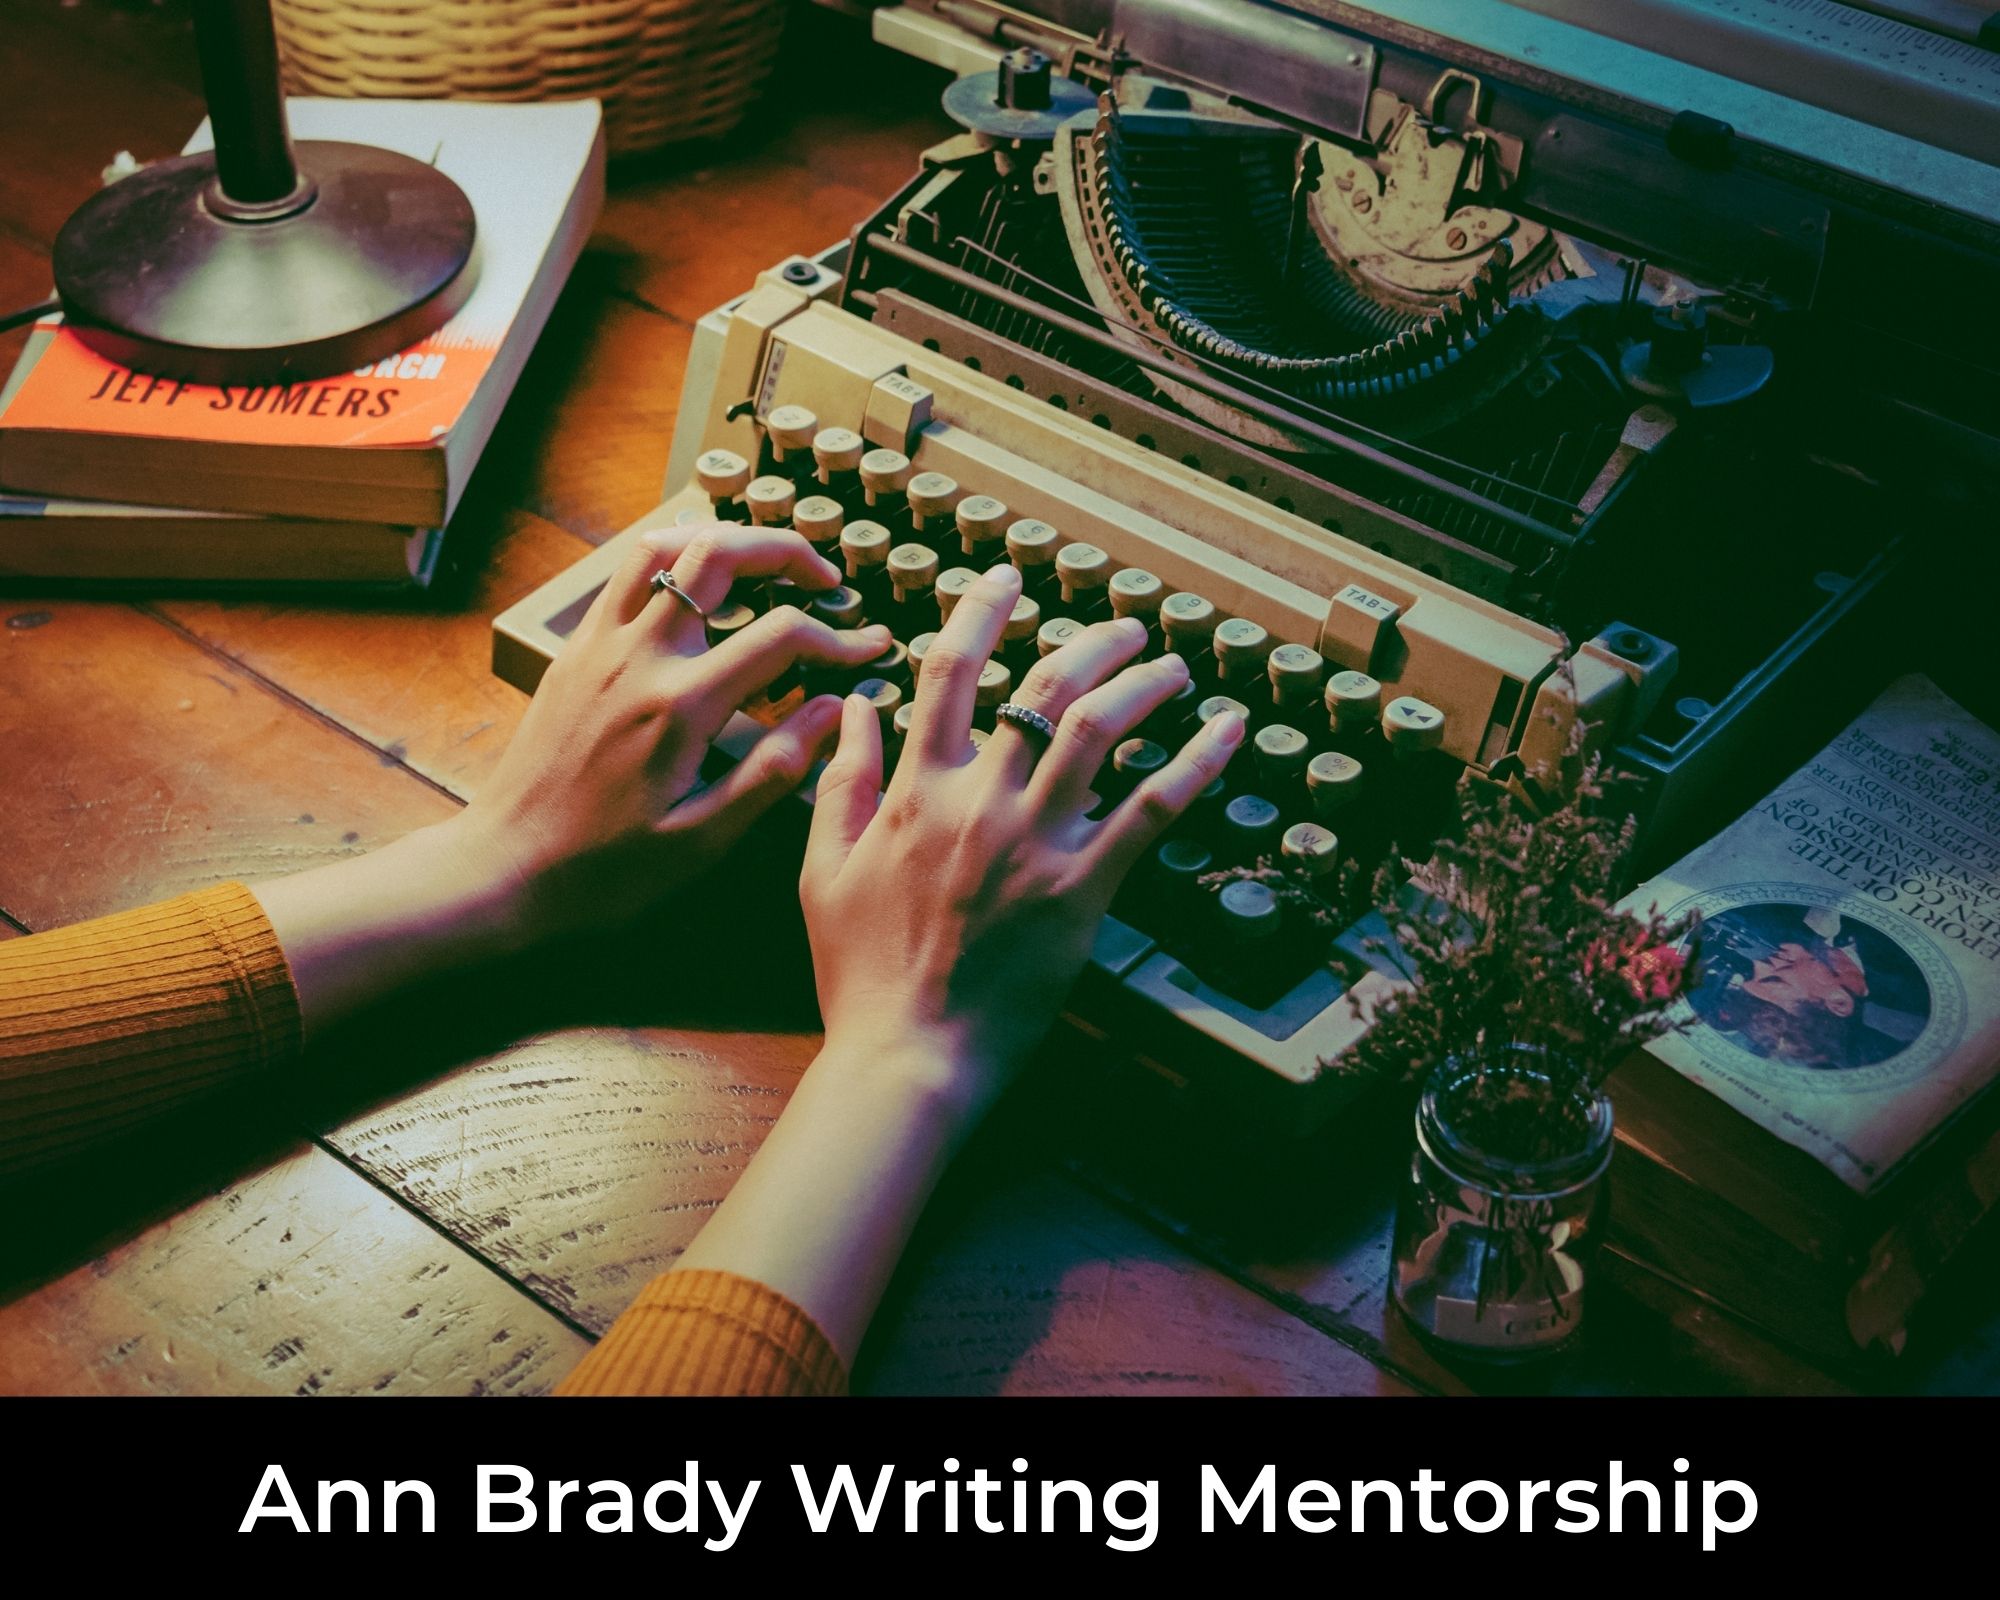 Win a writing mentorship from Ann Brady